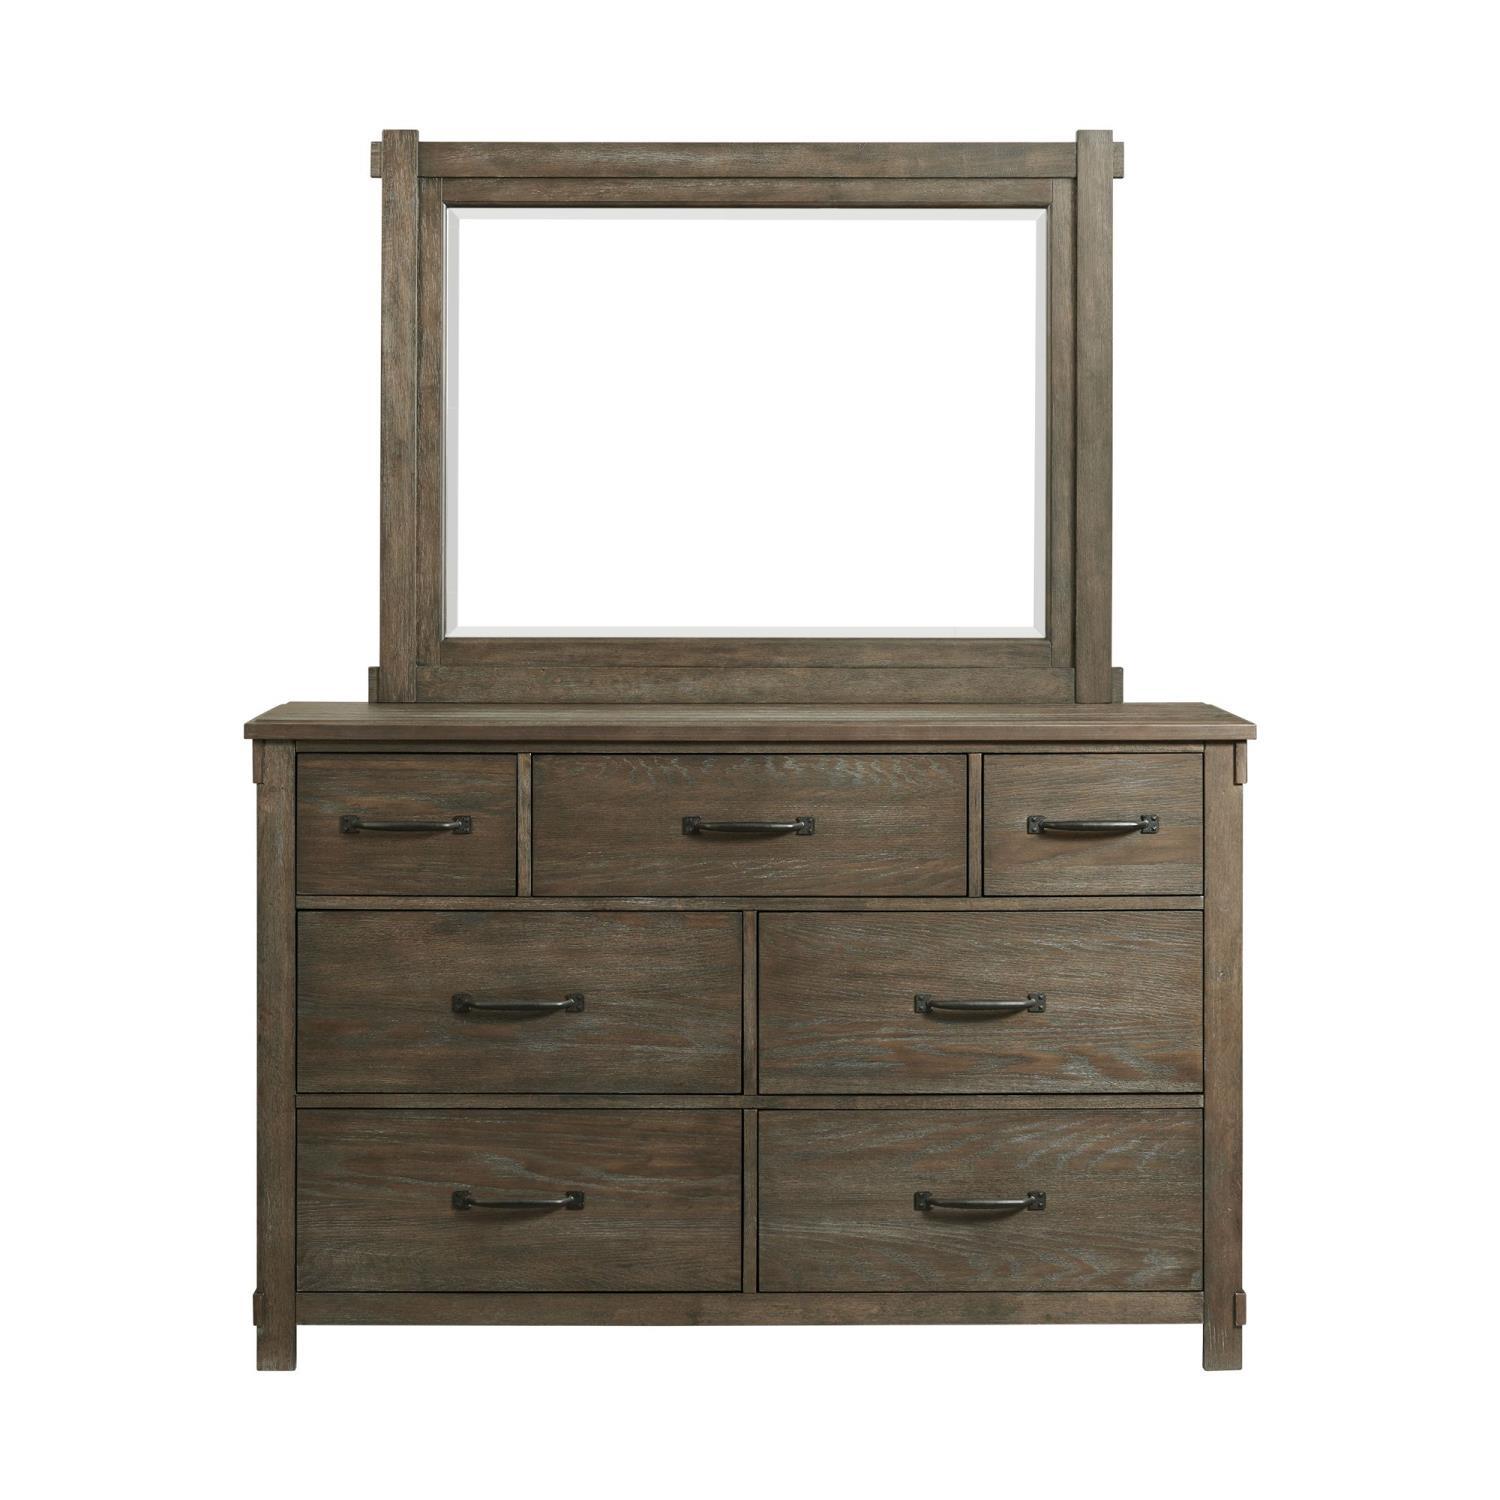 Picket House Furnishings Jack 7-Drawer Dresser with Mirror Set SC300DRMR